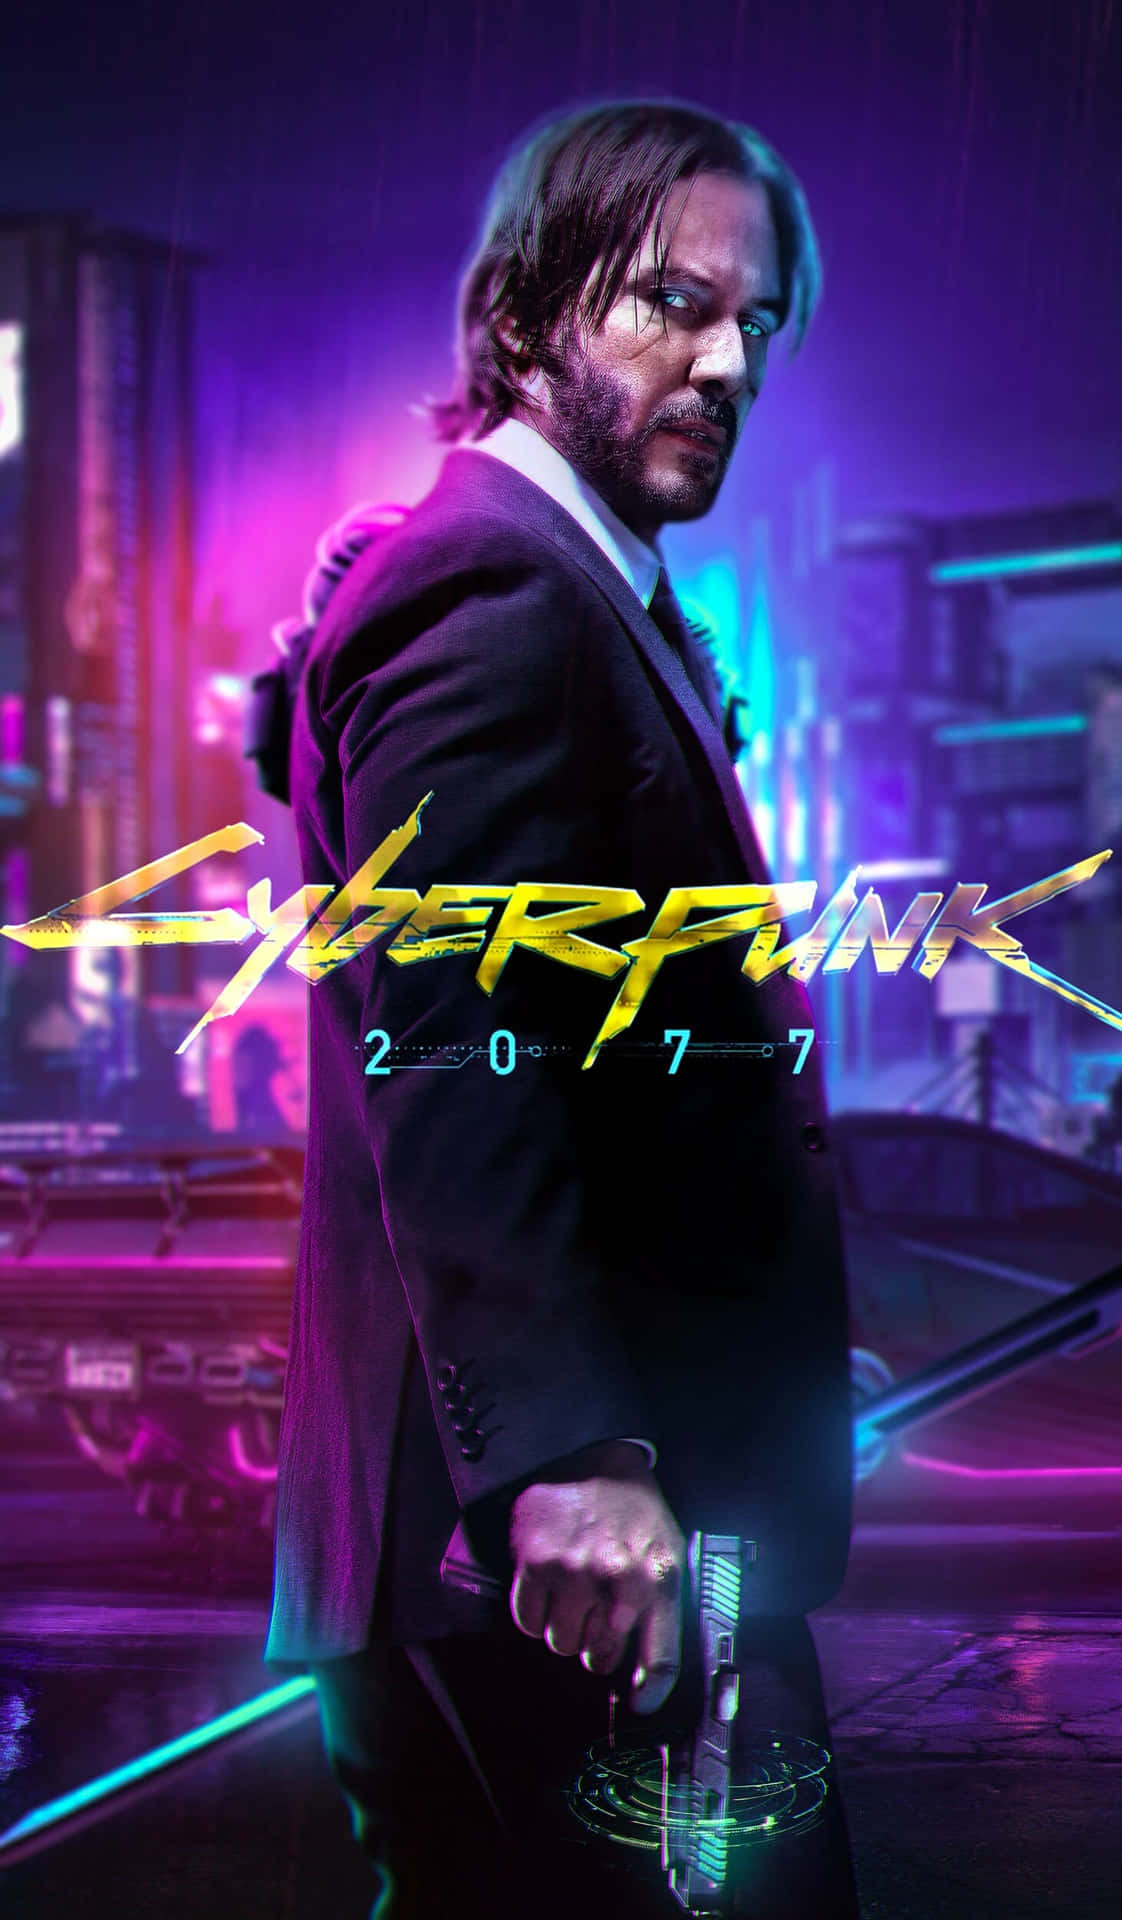 Iphonex Cyberpunk 2077 Bakgrundsbild Med Keanu Reeves Som Johnny Silverhand.